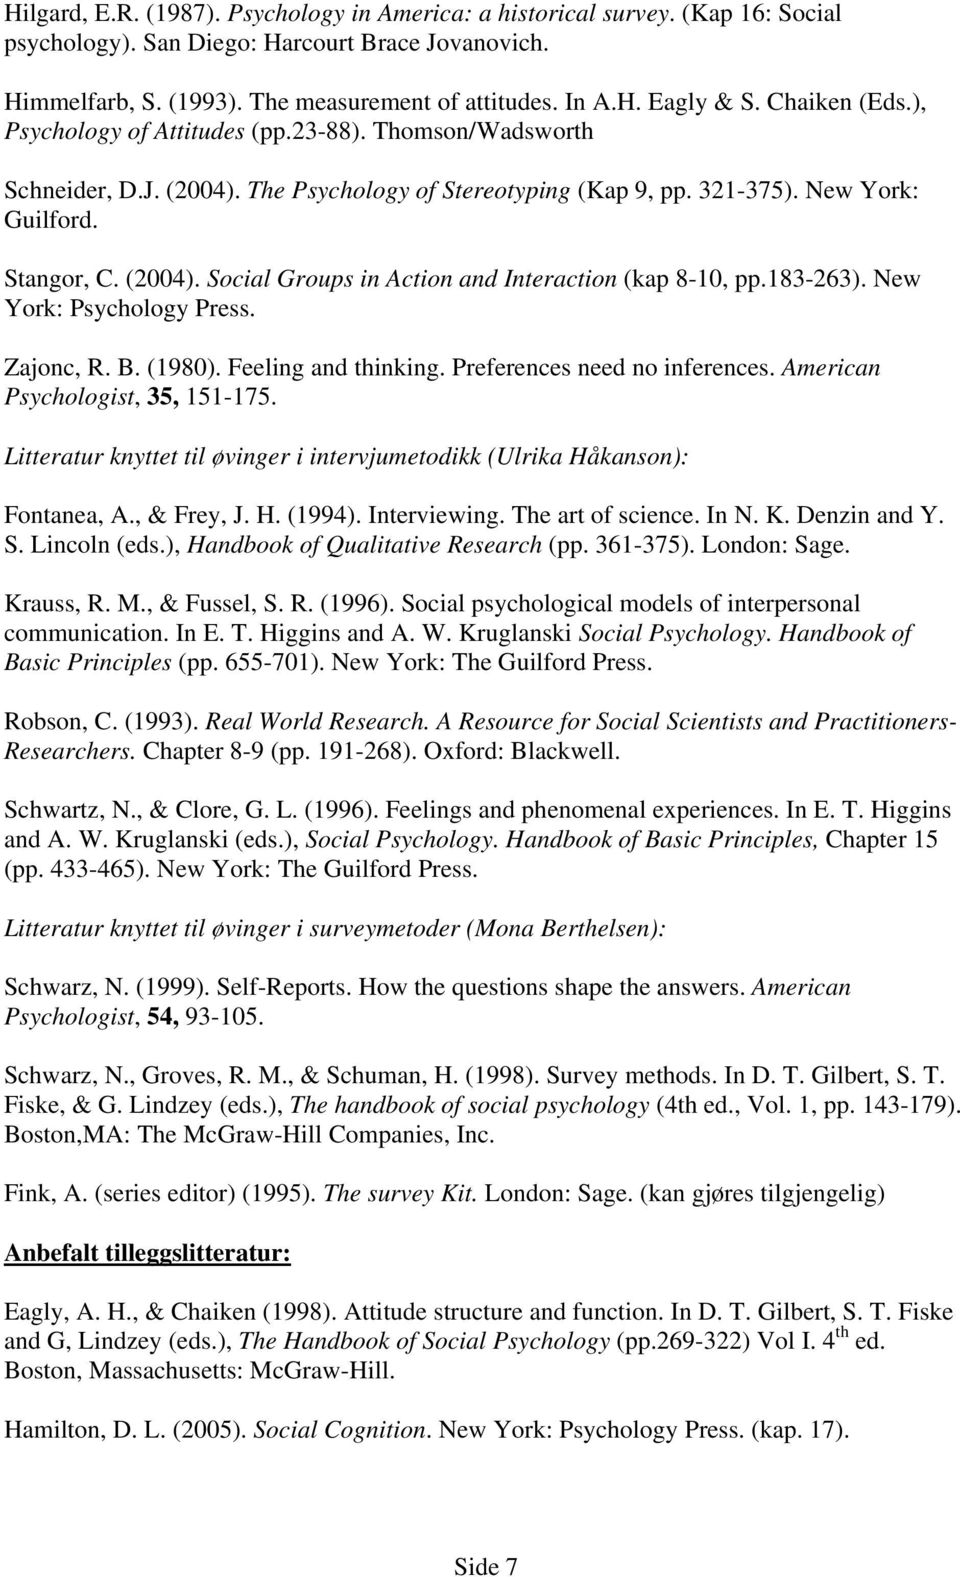 183-263). New York: Psychology Press. Zajonc, R. B. (1980). Feeling and thinking. Preferences need no inferences. American Psychologist, 35, 151-175.